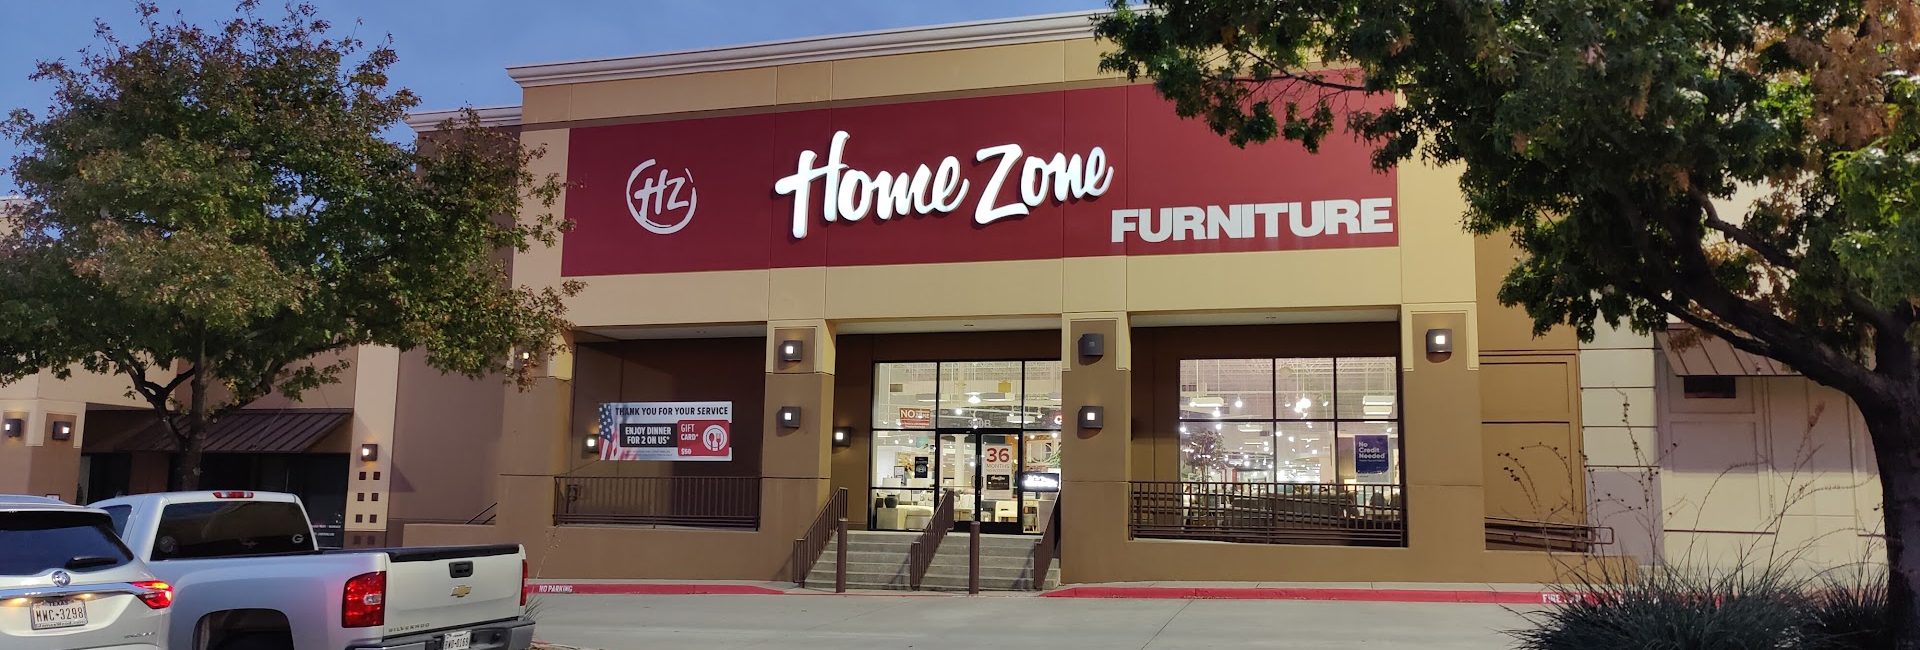 Home Zone Furniture 6